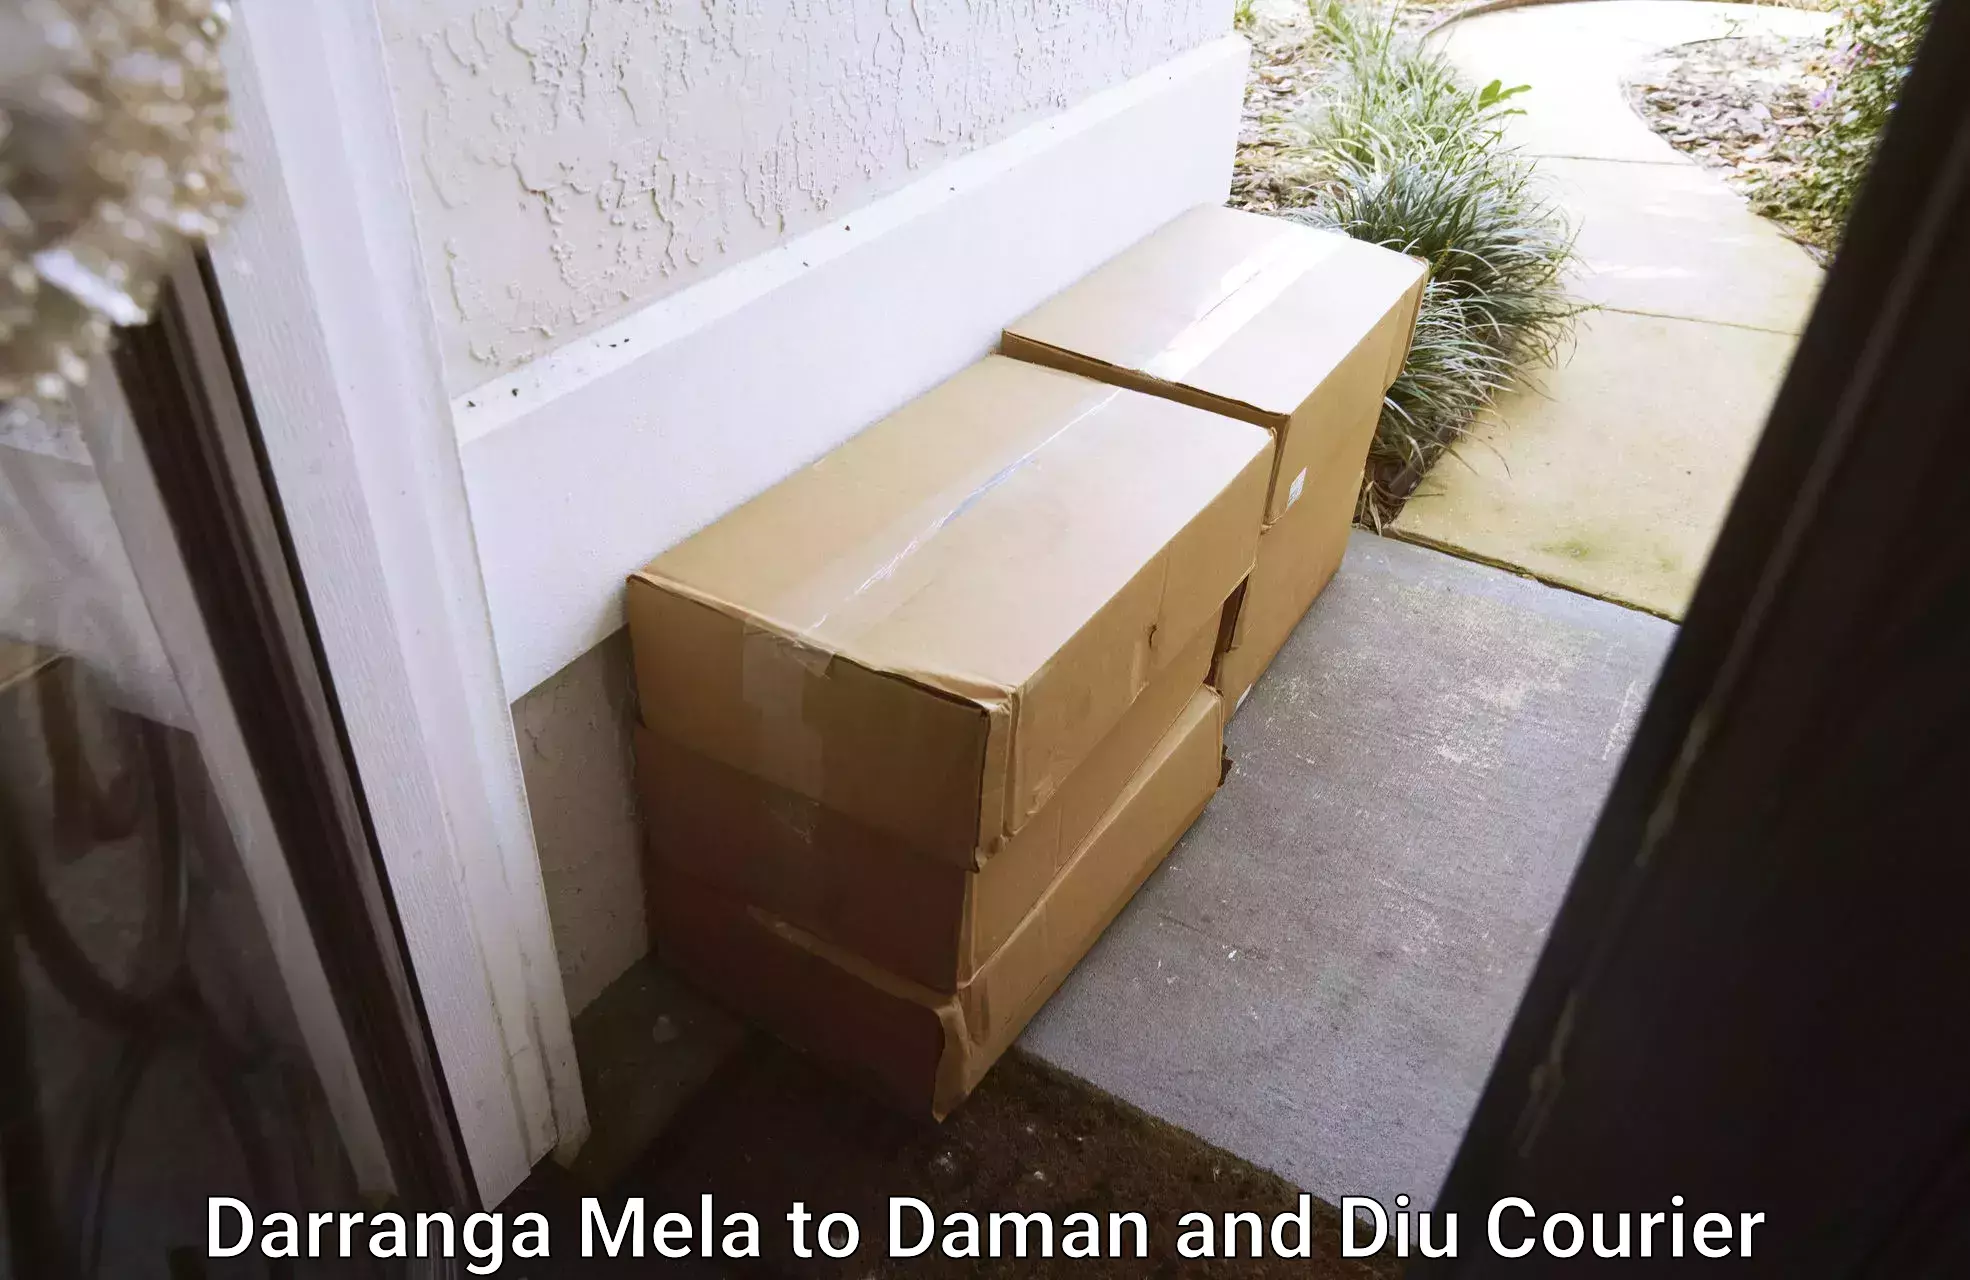 Customizable shipping options in Darranga Mela to Daman and Diu